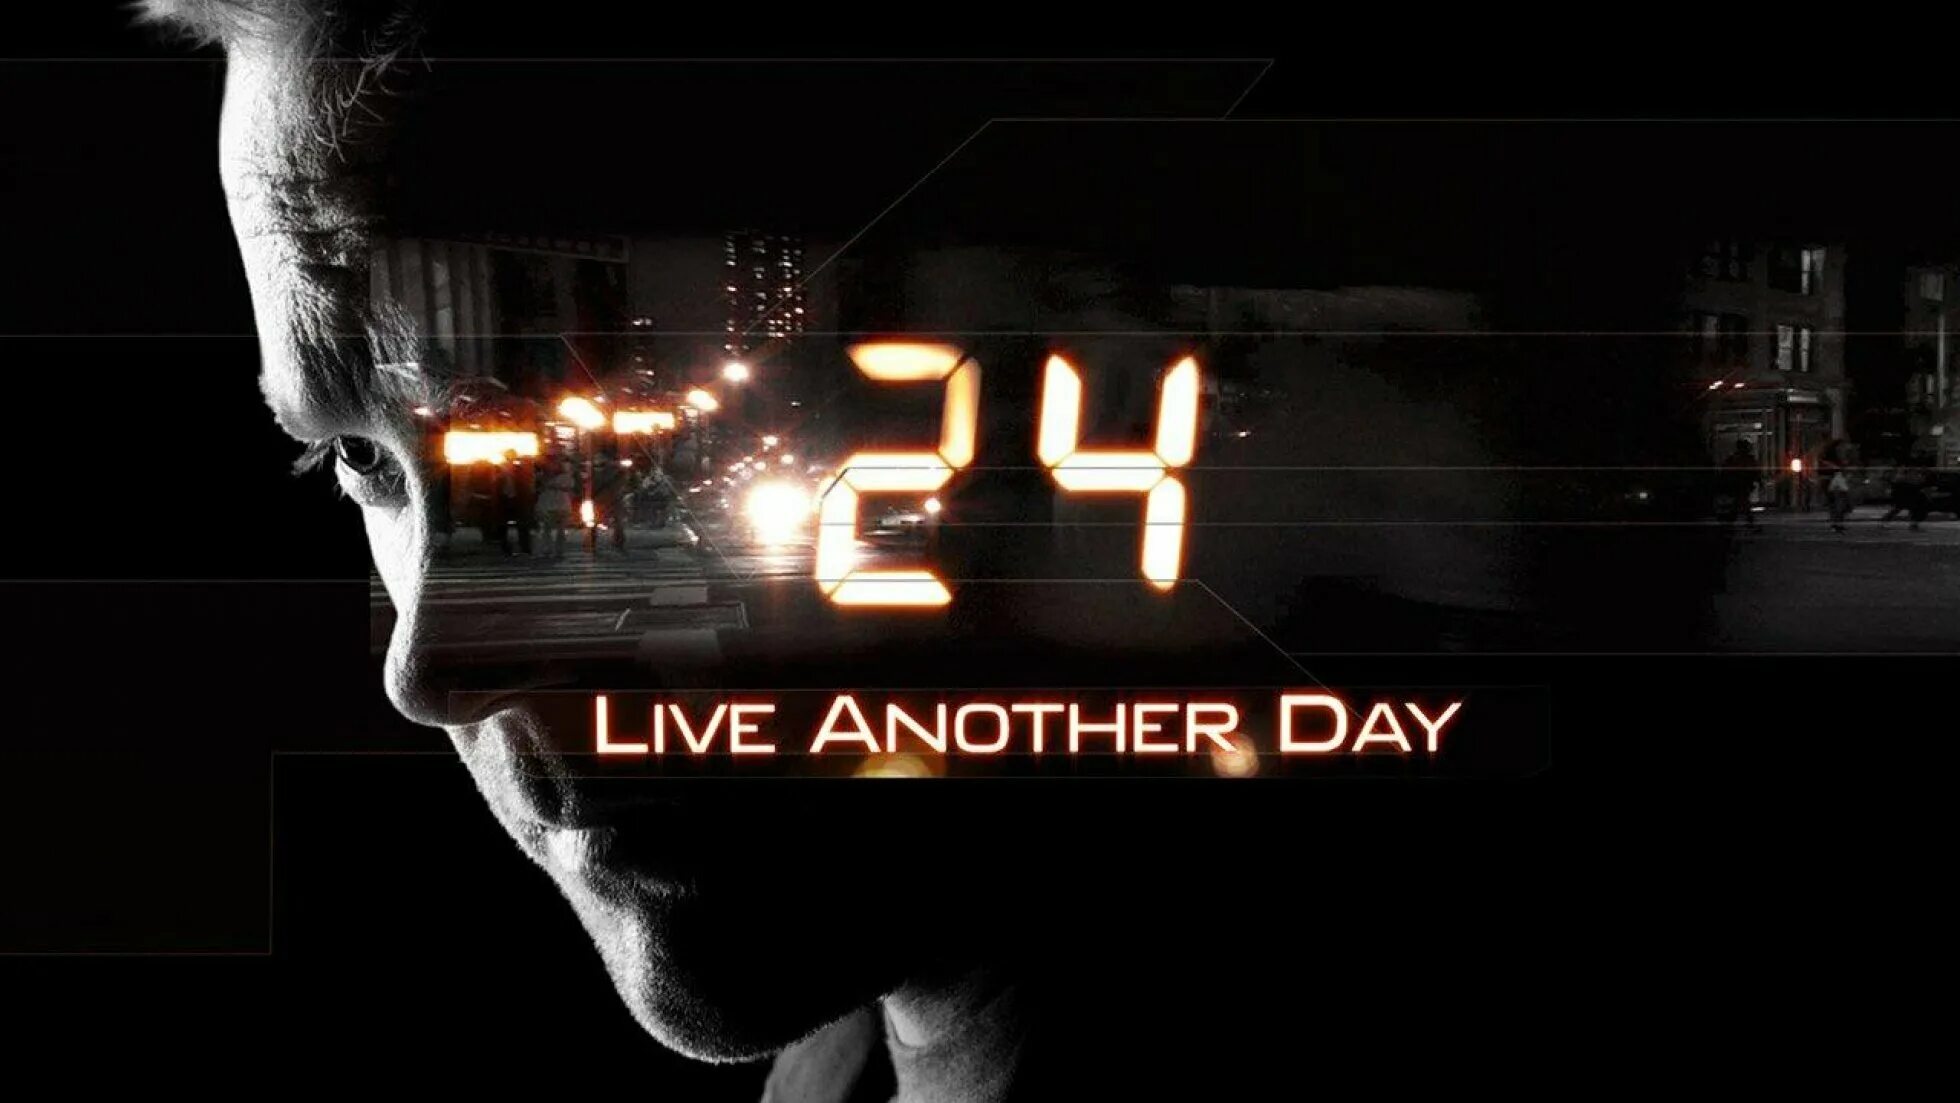 Тур 24 часа. 24 Часа. Обои 24 часа. 24 Часа фото. Live another Day.